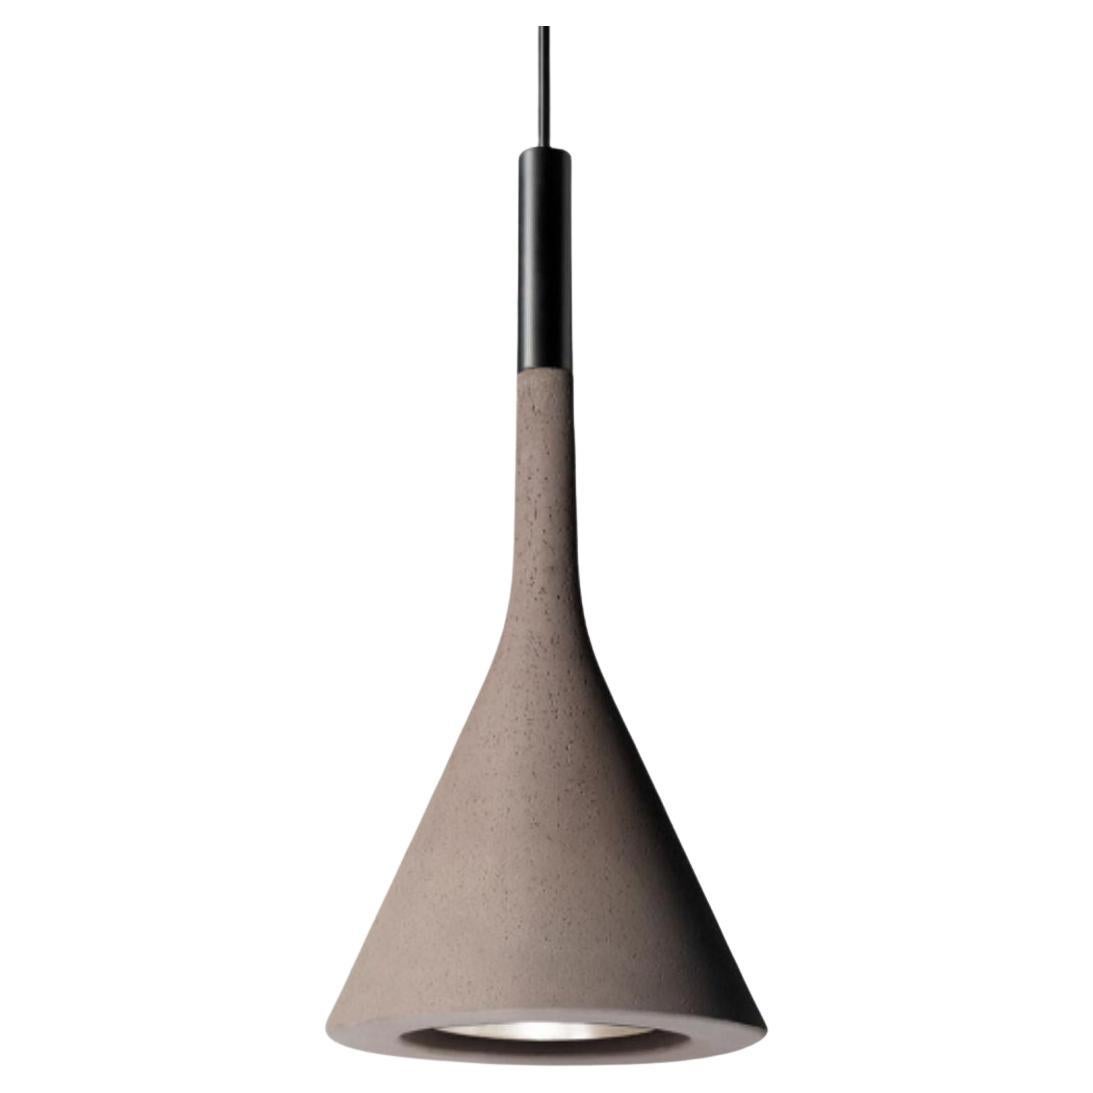 Lucidi & Pevere ‘Aplomb’ Concrete Pendant Lamp in Maroon for Foscarini